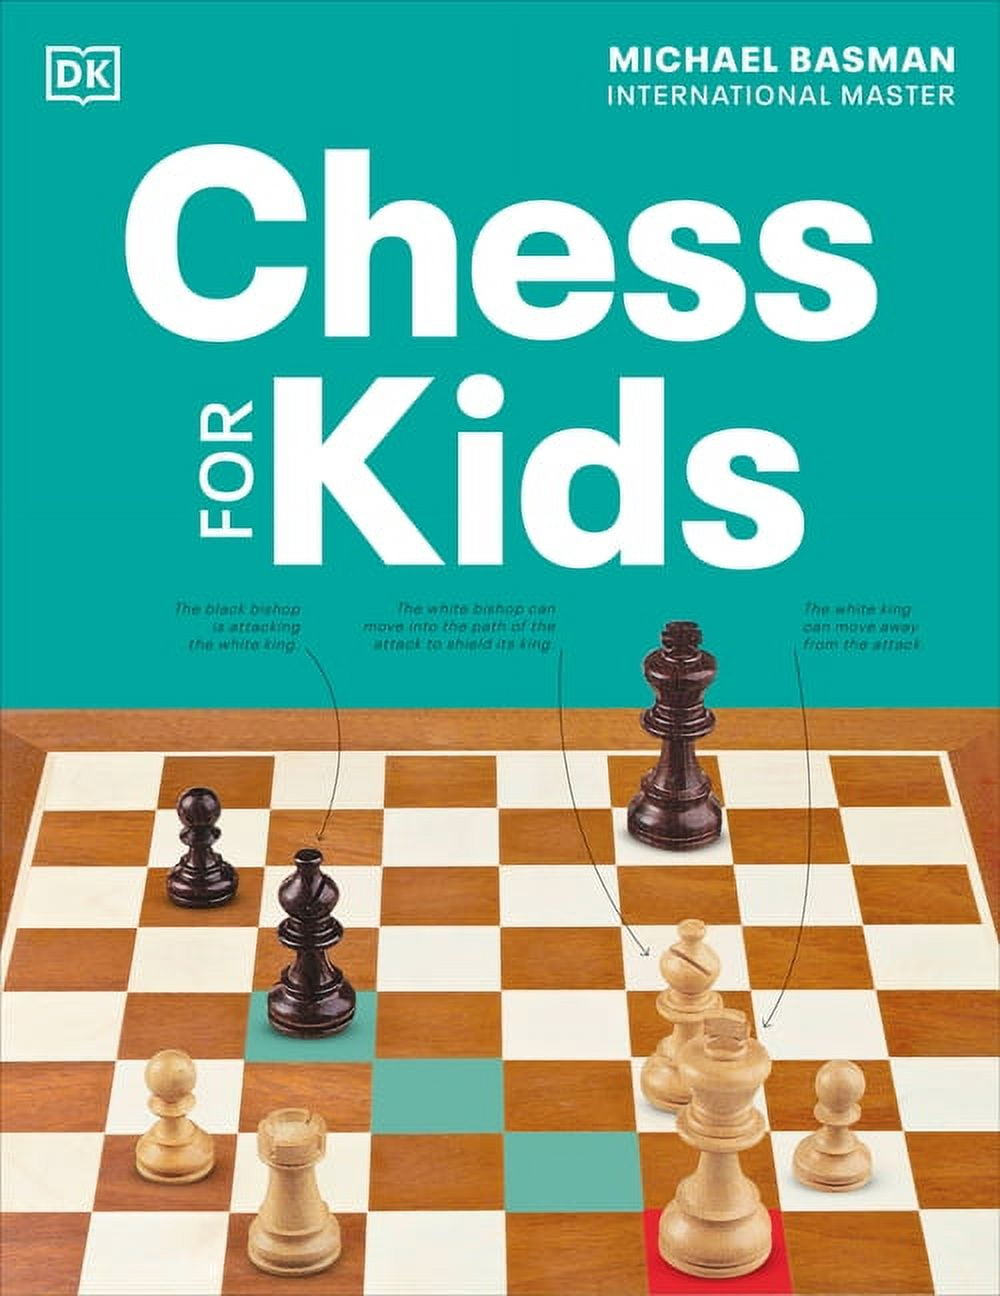 Master Chess Unblocked